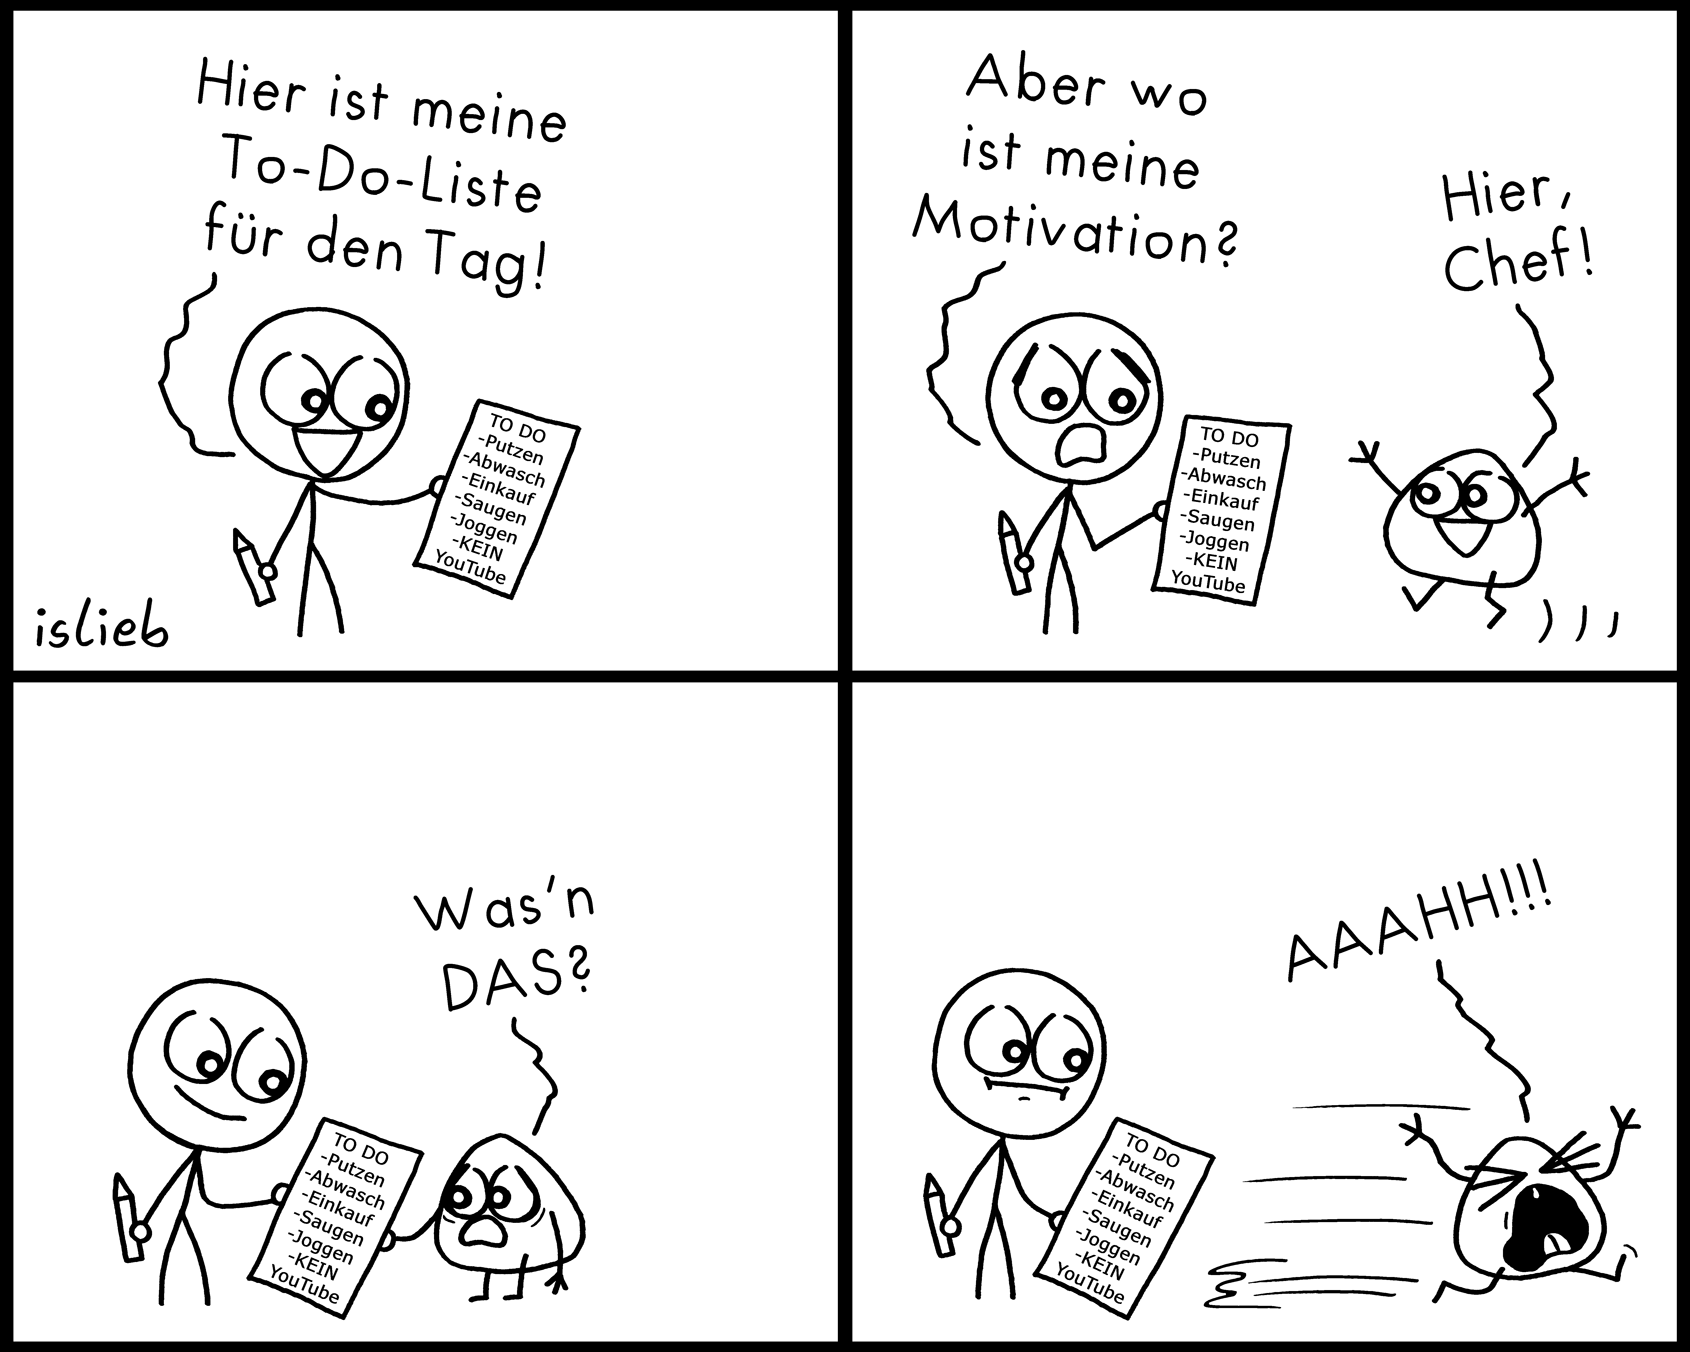 Hier ist eine. Комикс на немецком. Комиксы на немецком языке. Комикс по немецкому языку. Небольшой комикс на немецком языке.